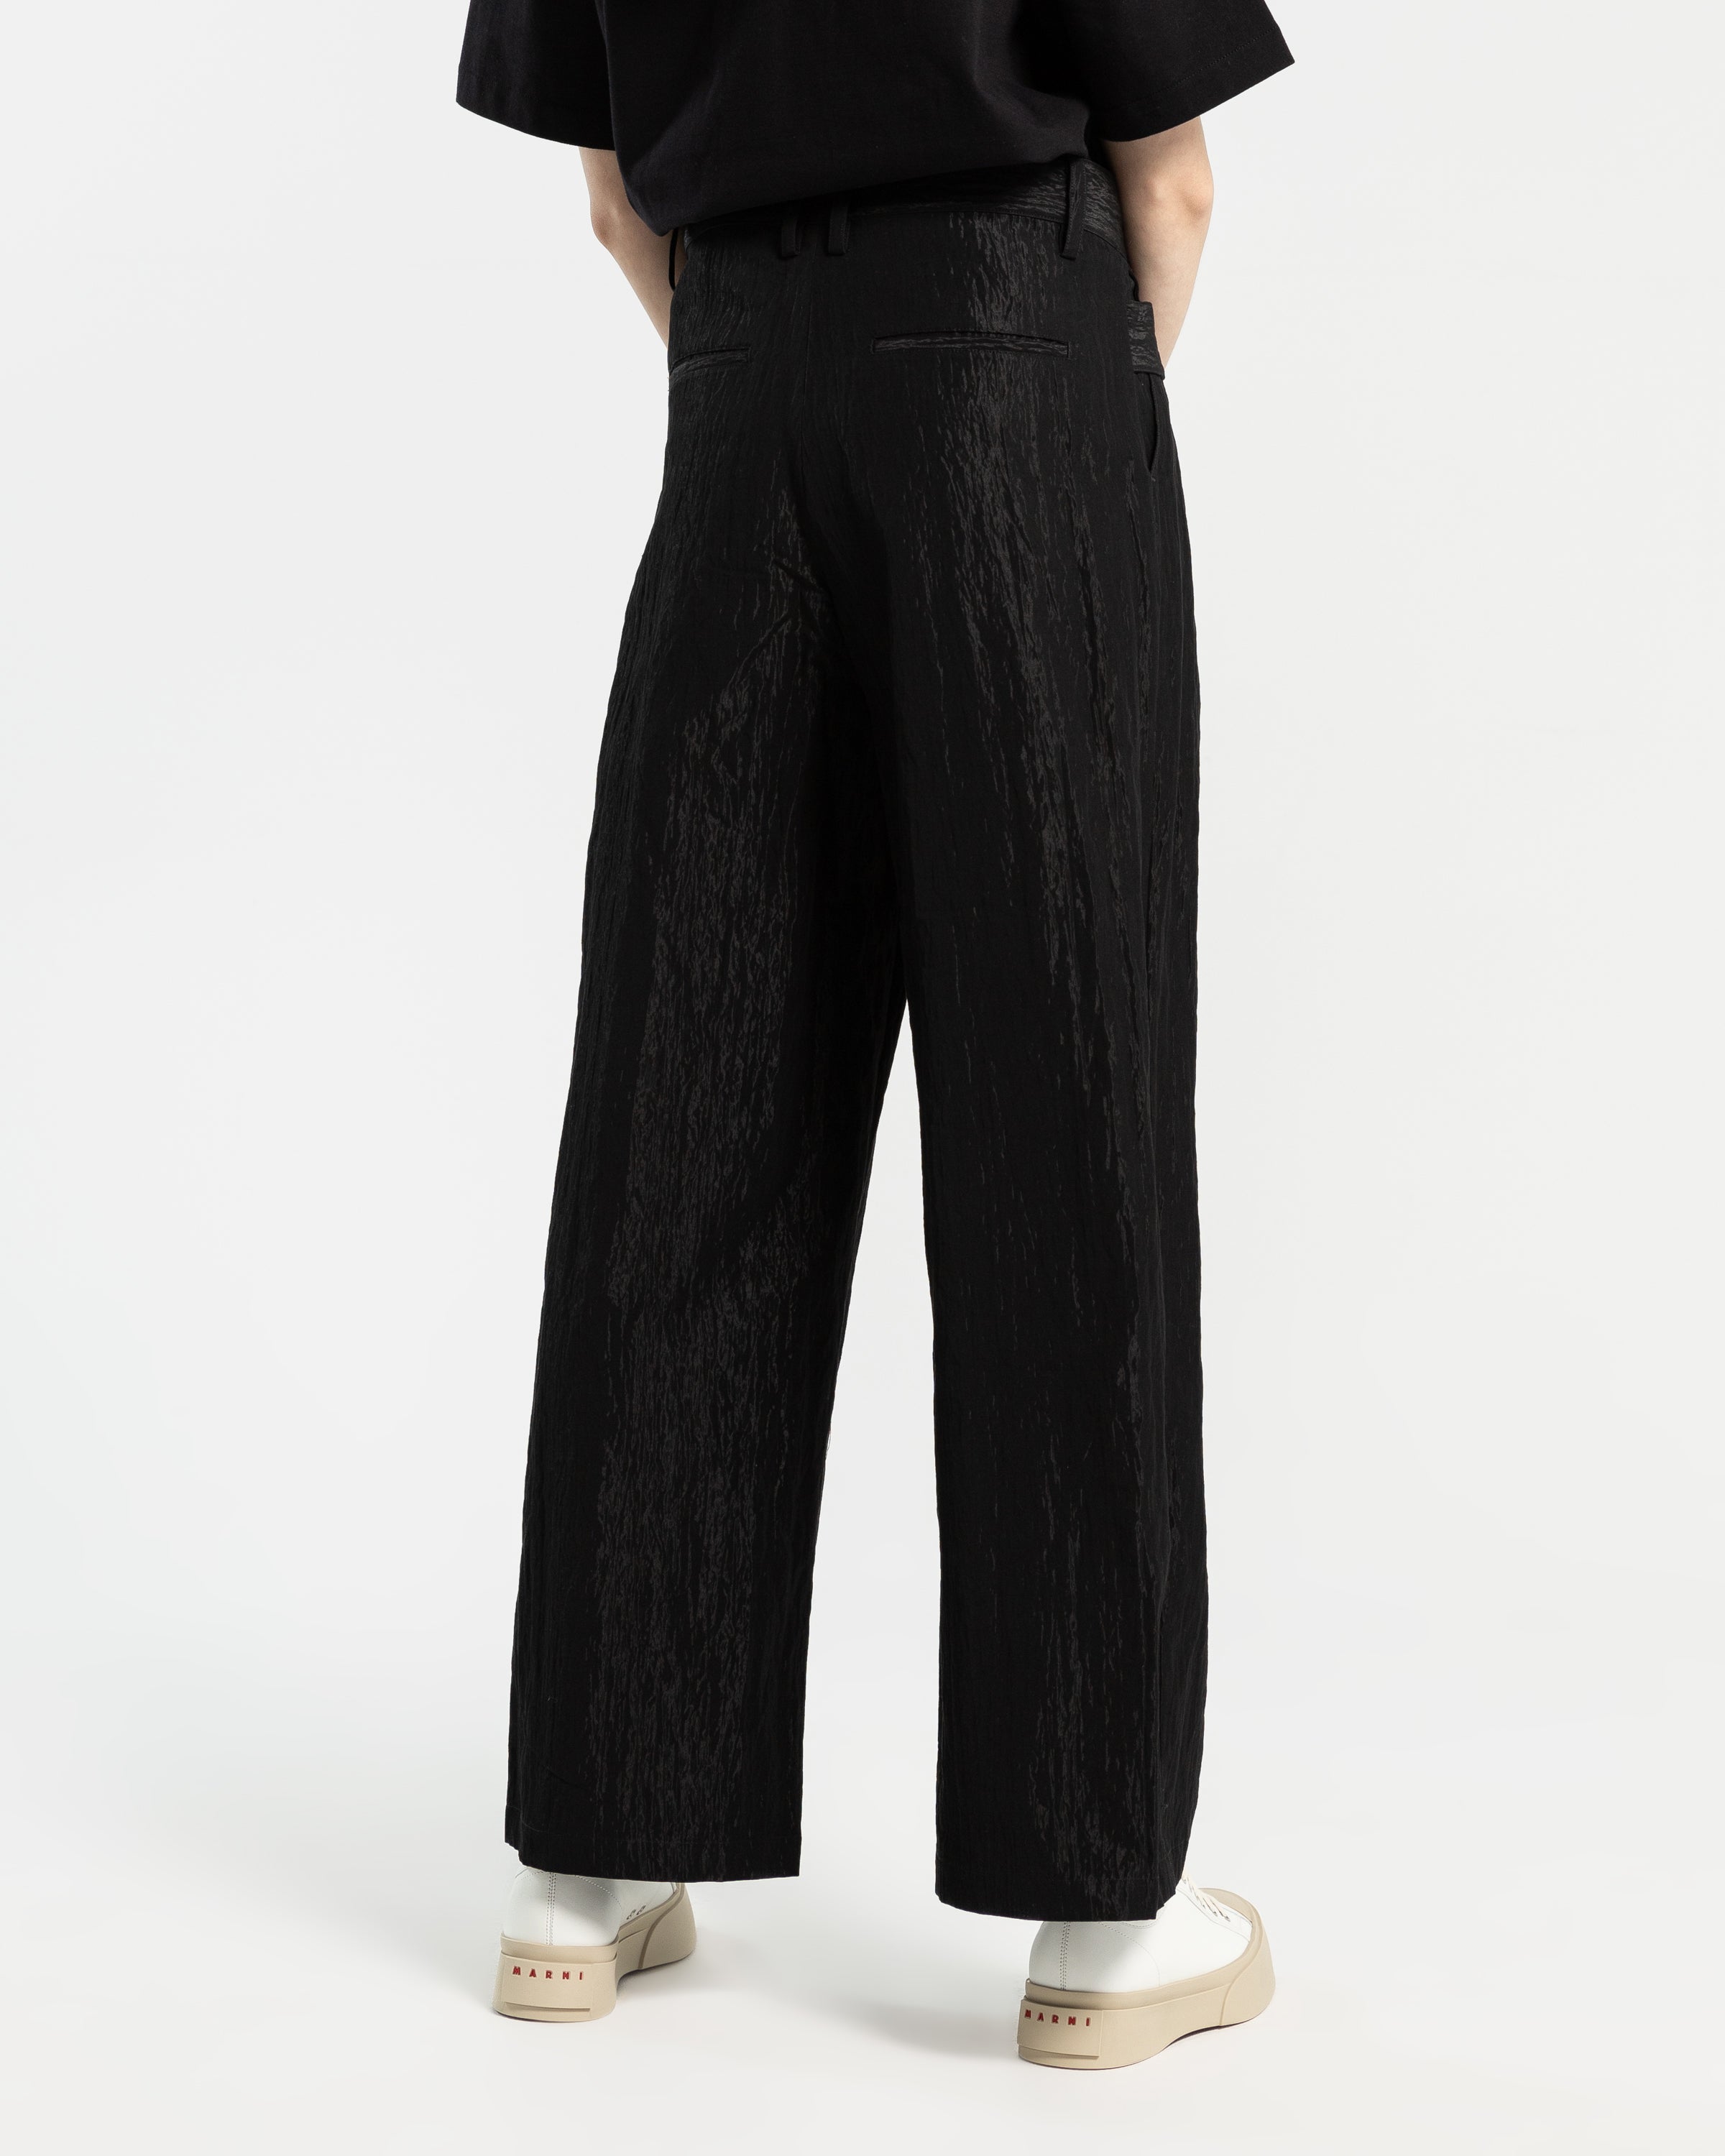 Asymmetric Pants in Black